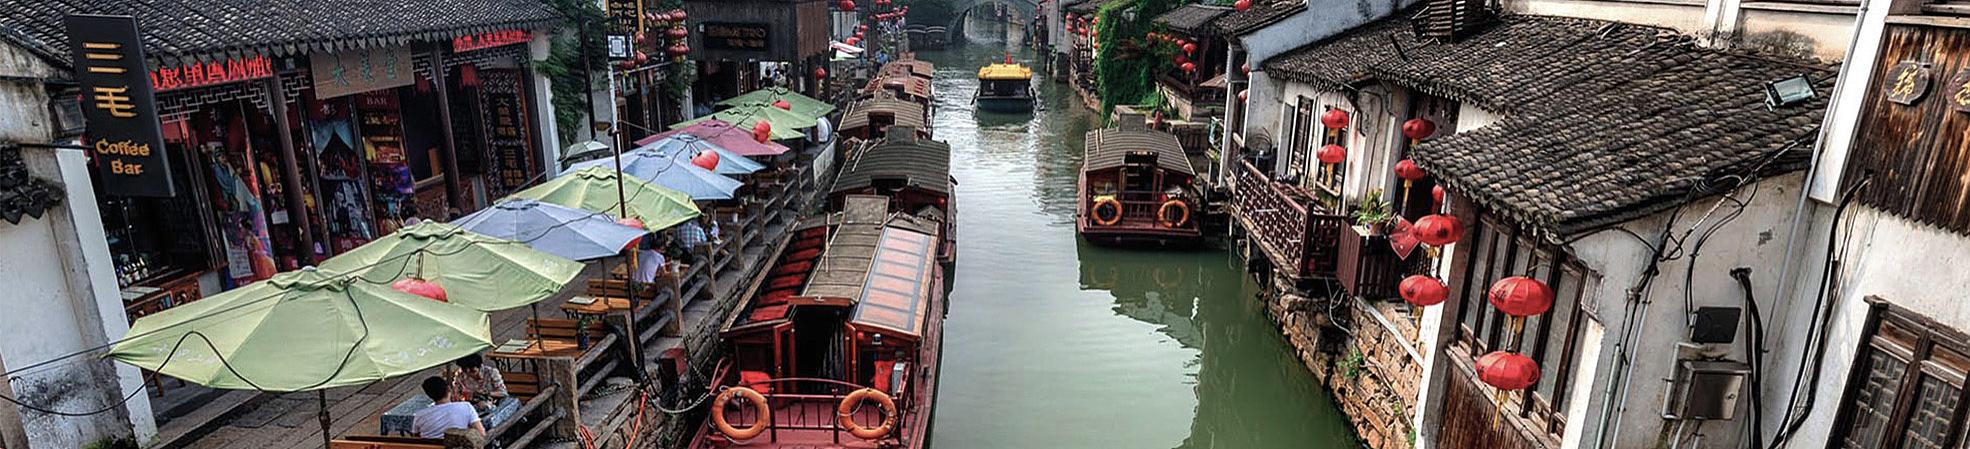 Suzhou Grand Canal Photo Tour